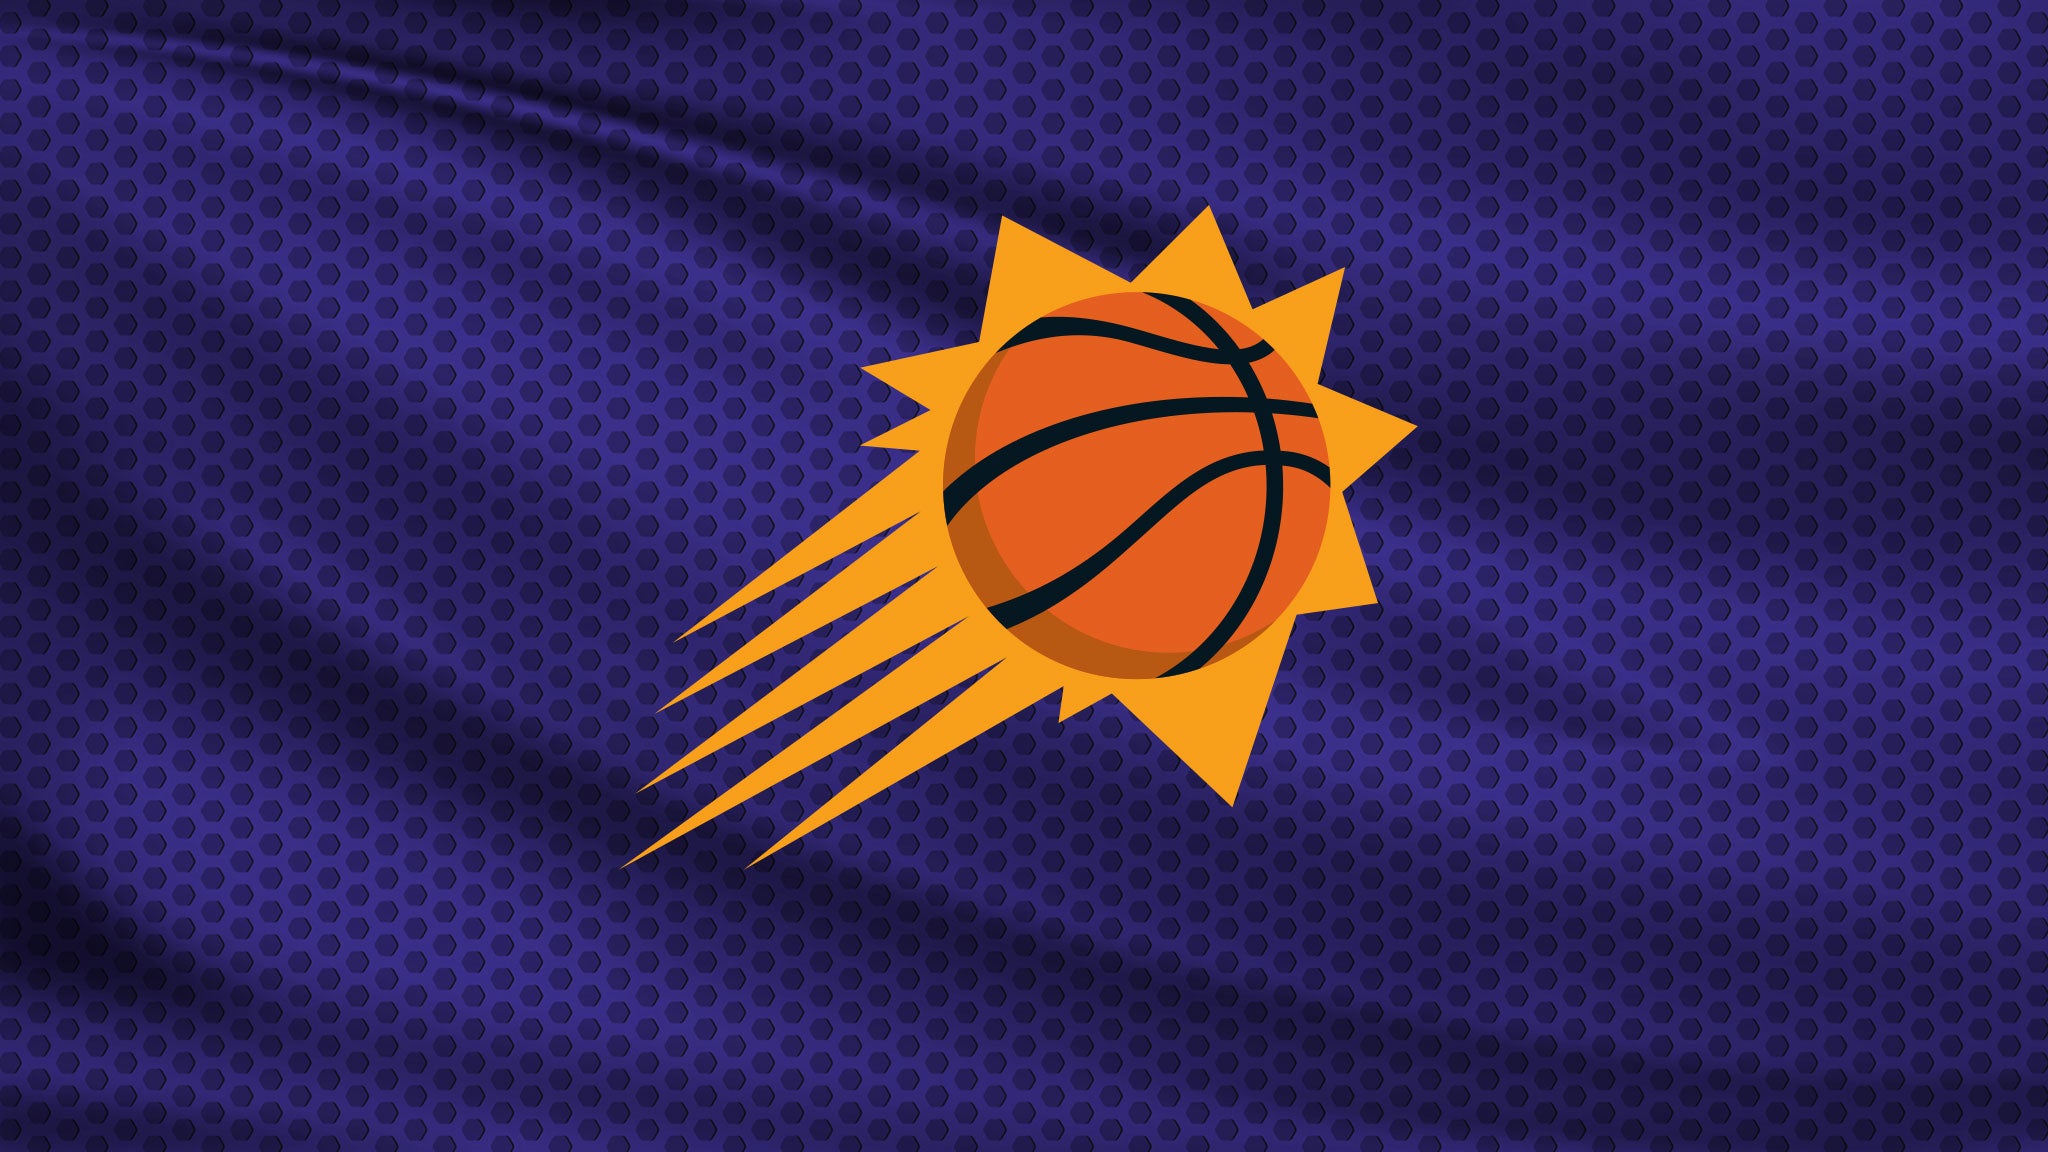 Phoenix Suns vs. Detroit Pistons in Phoenix promo photo for SMS presale offer code